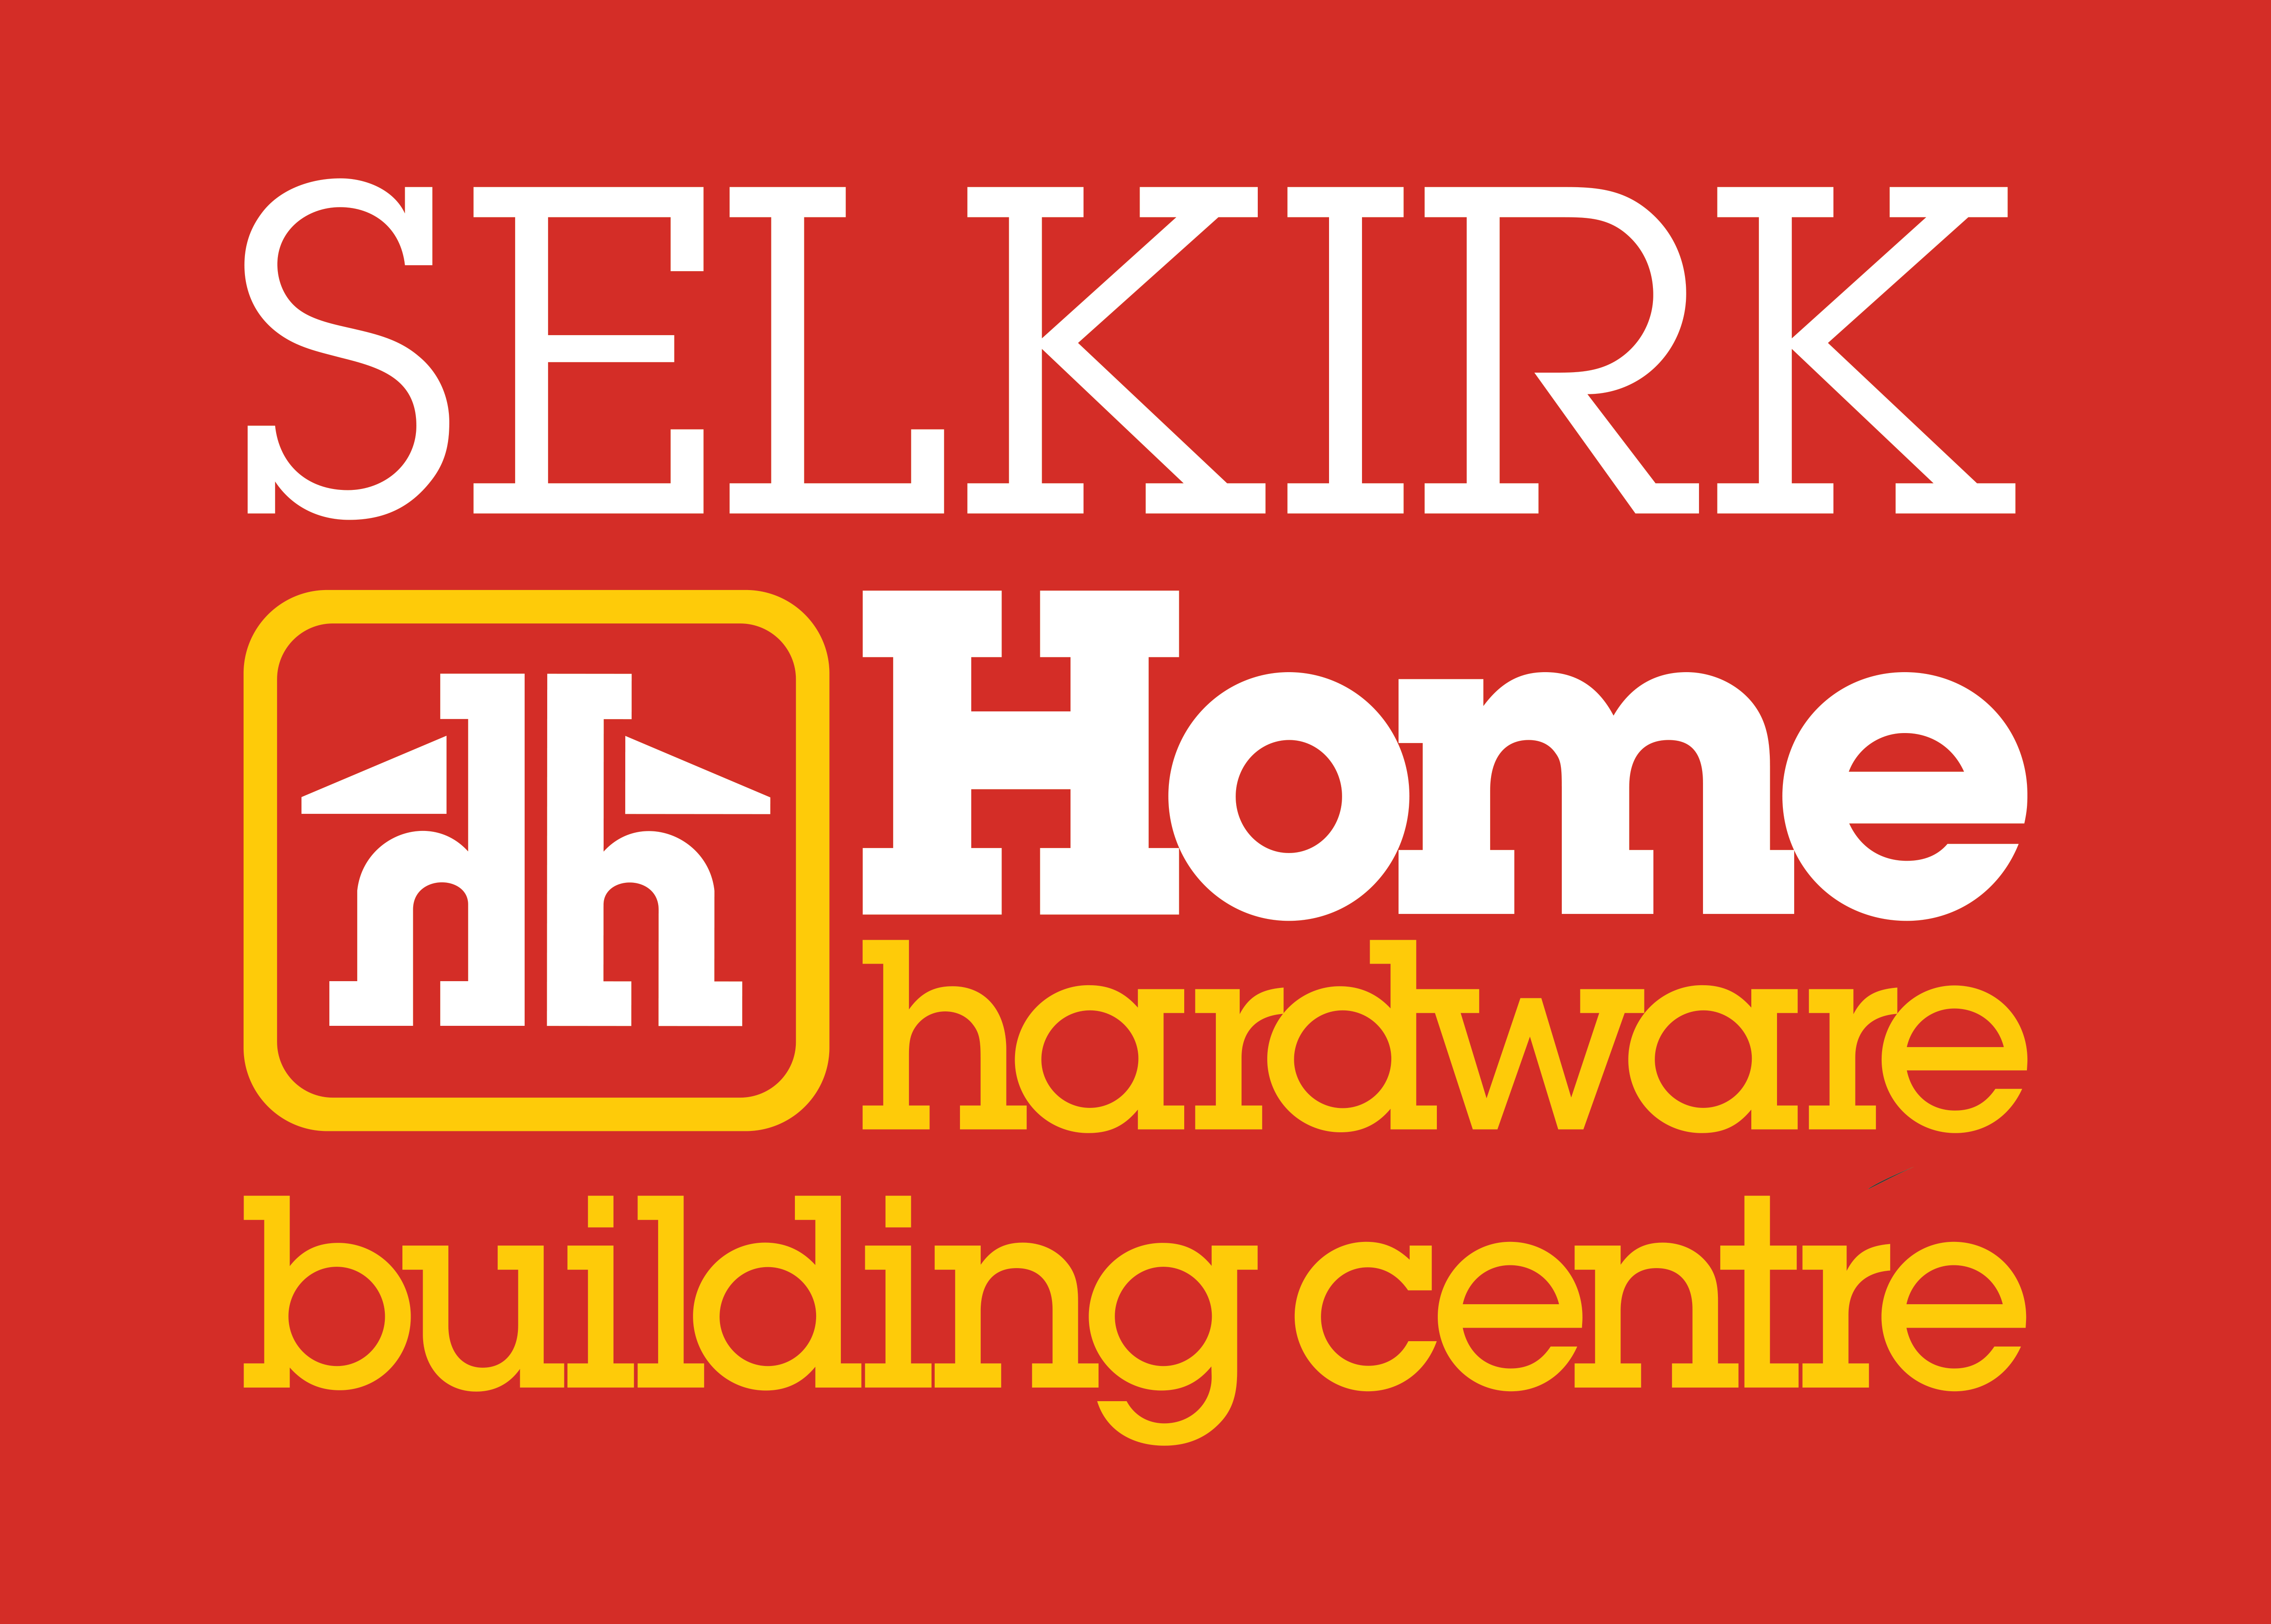 Home Hardware Selkirk logo.png